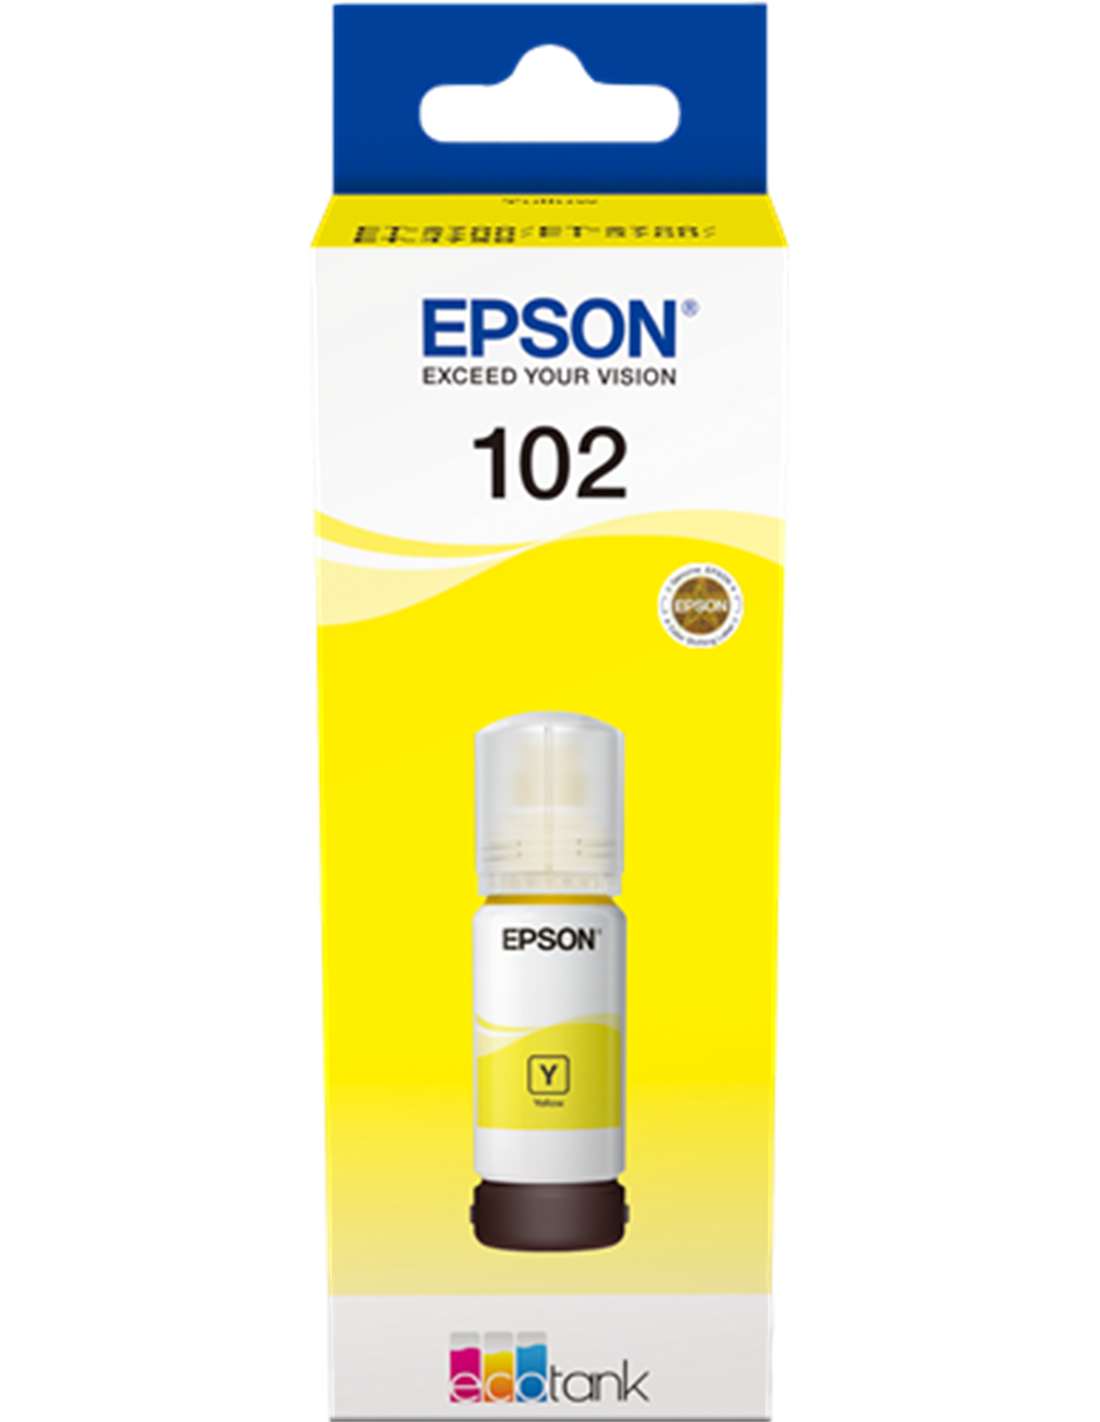 Epson 102 - Epson C13T03R440 - EcoTank 102 - Jaune - Flacon d'encre Epson